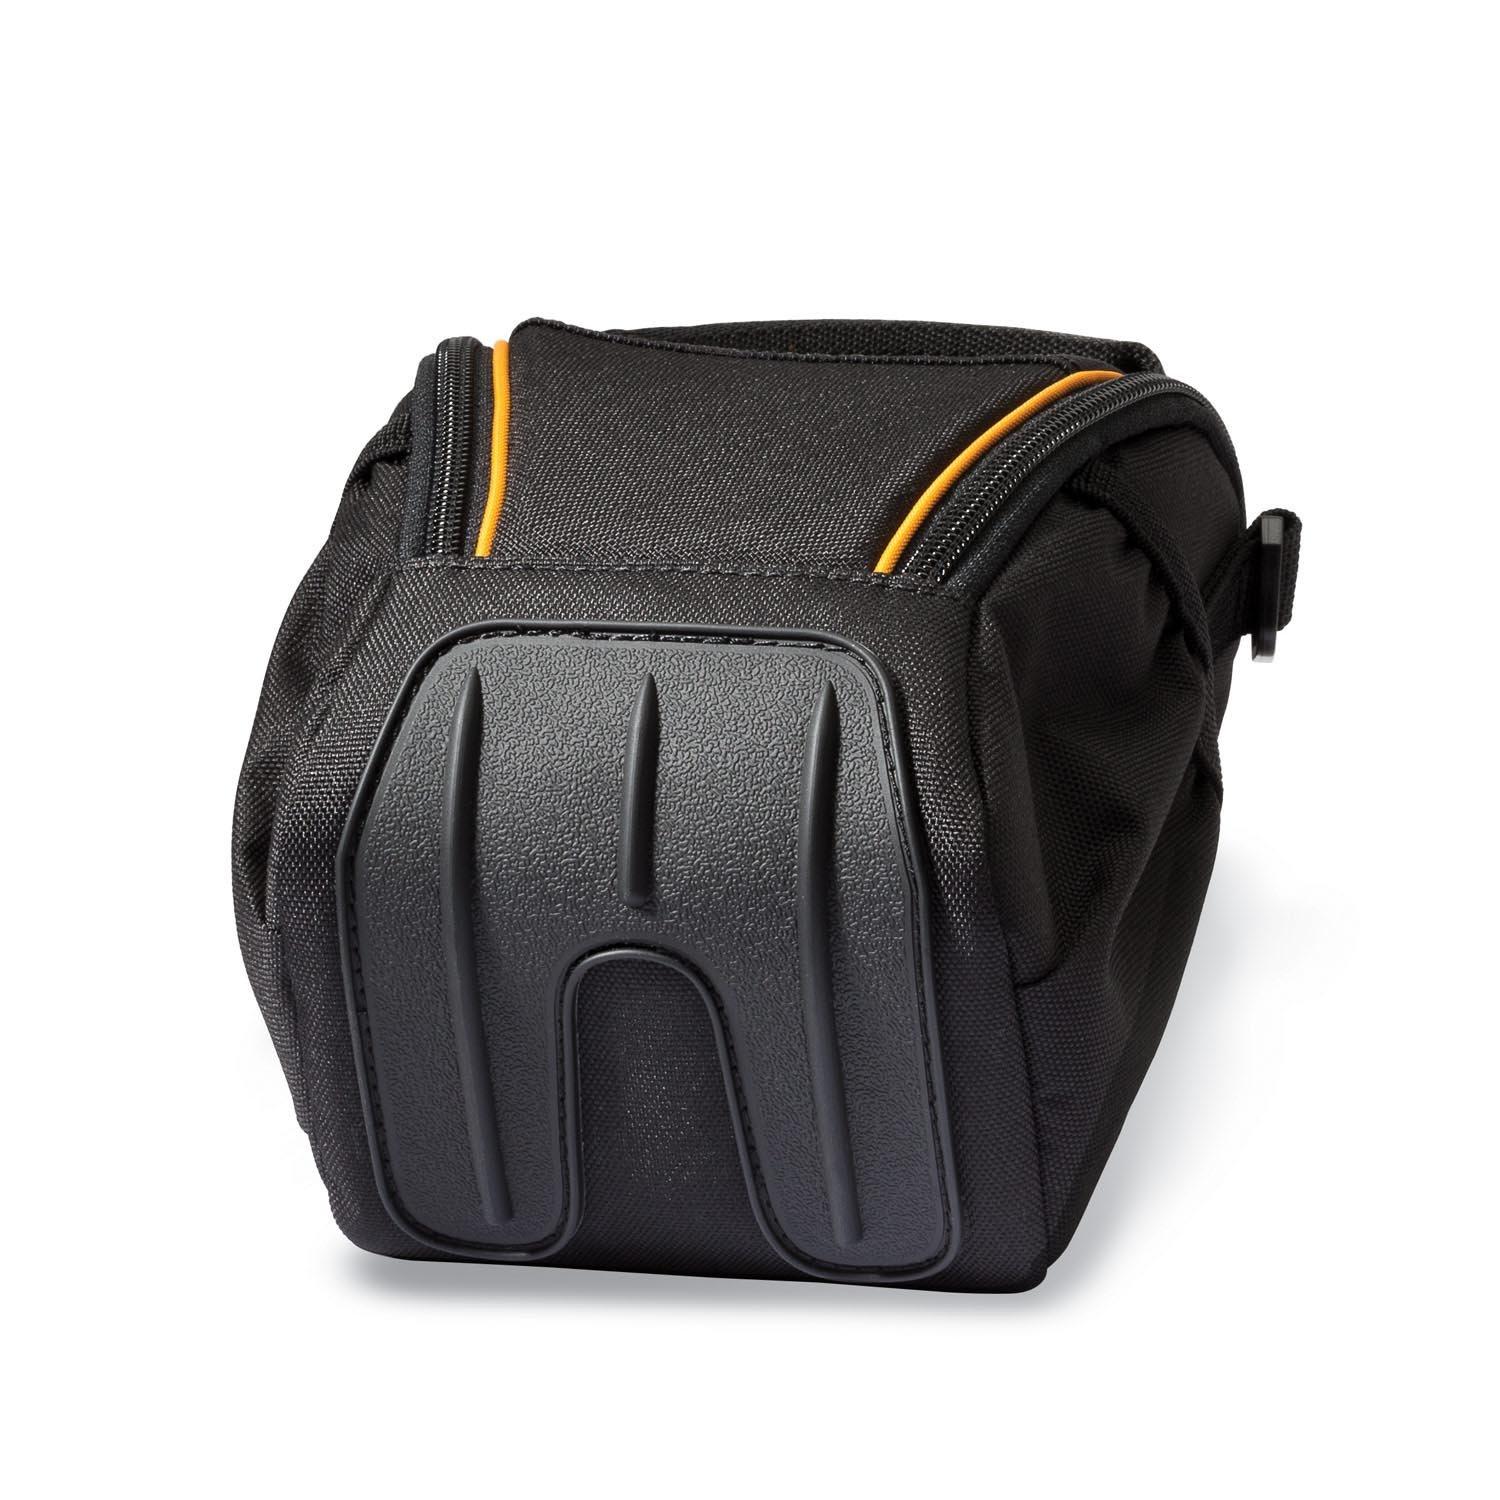 list item 3 of 5 Lowepro Adventura SH 100 II Shoulder Bag